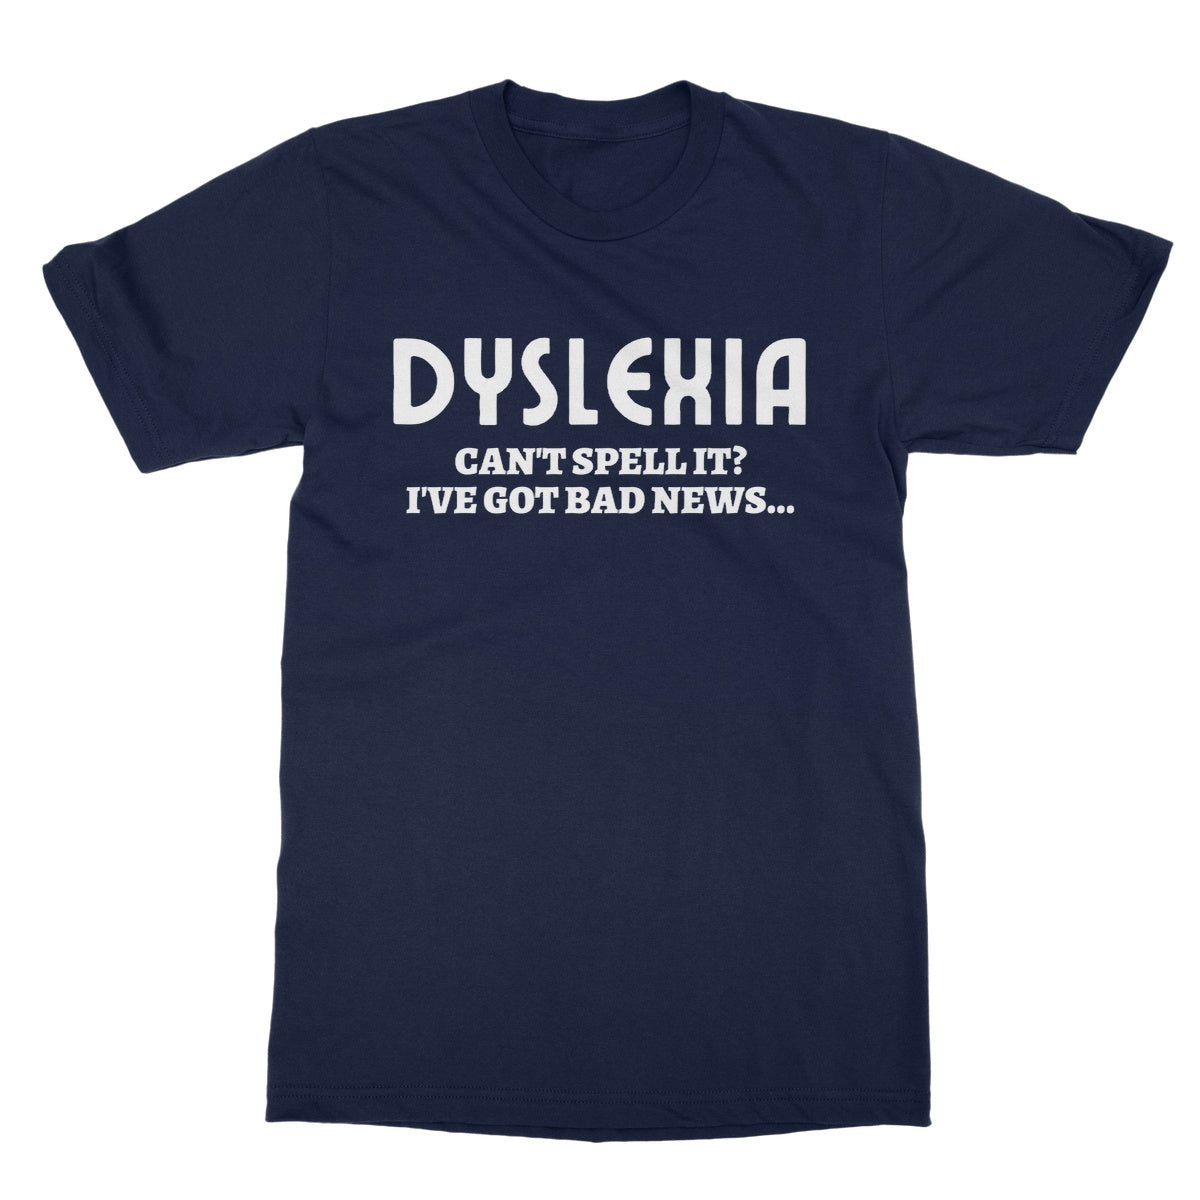 dyslexia t shirt navy